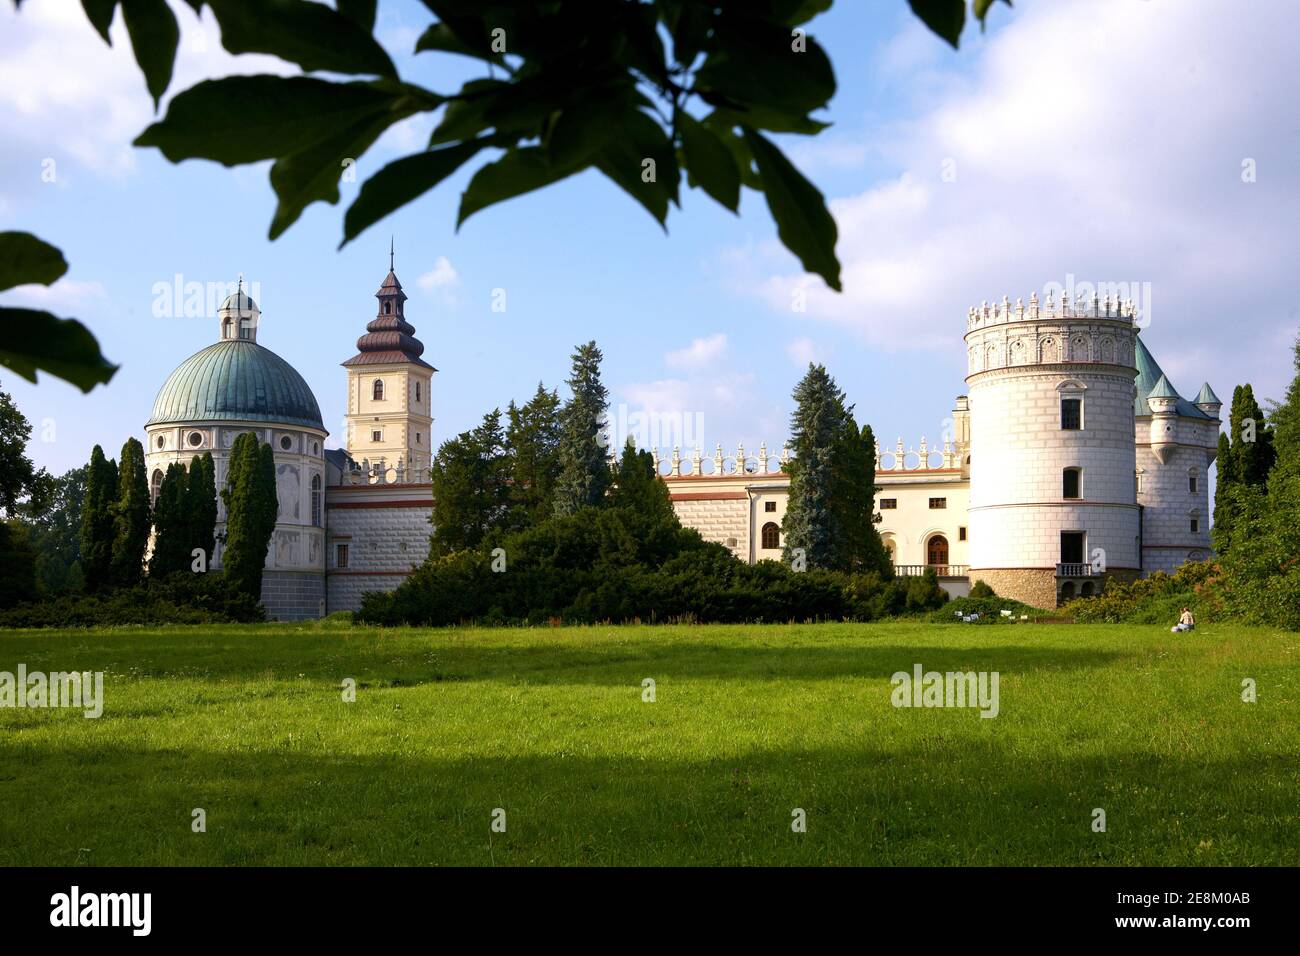 Poland, Krasiczyn, castle. Stock Photo